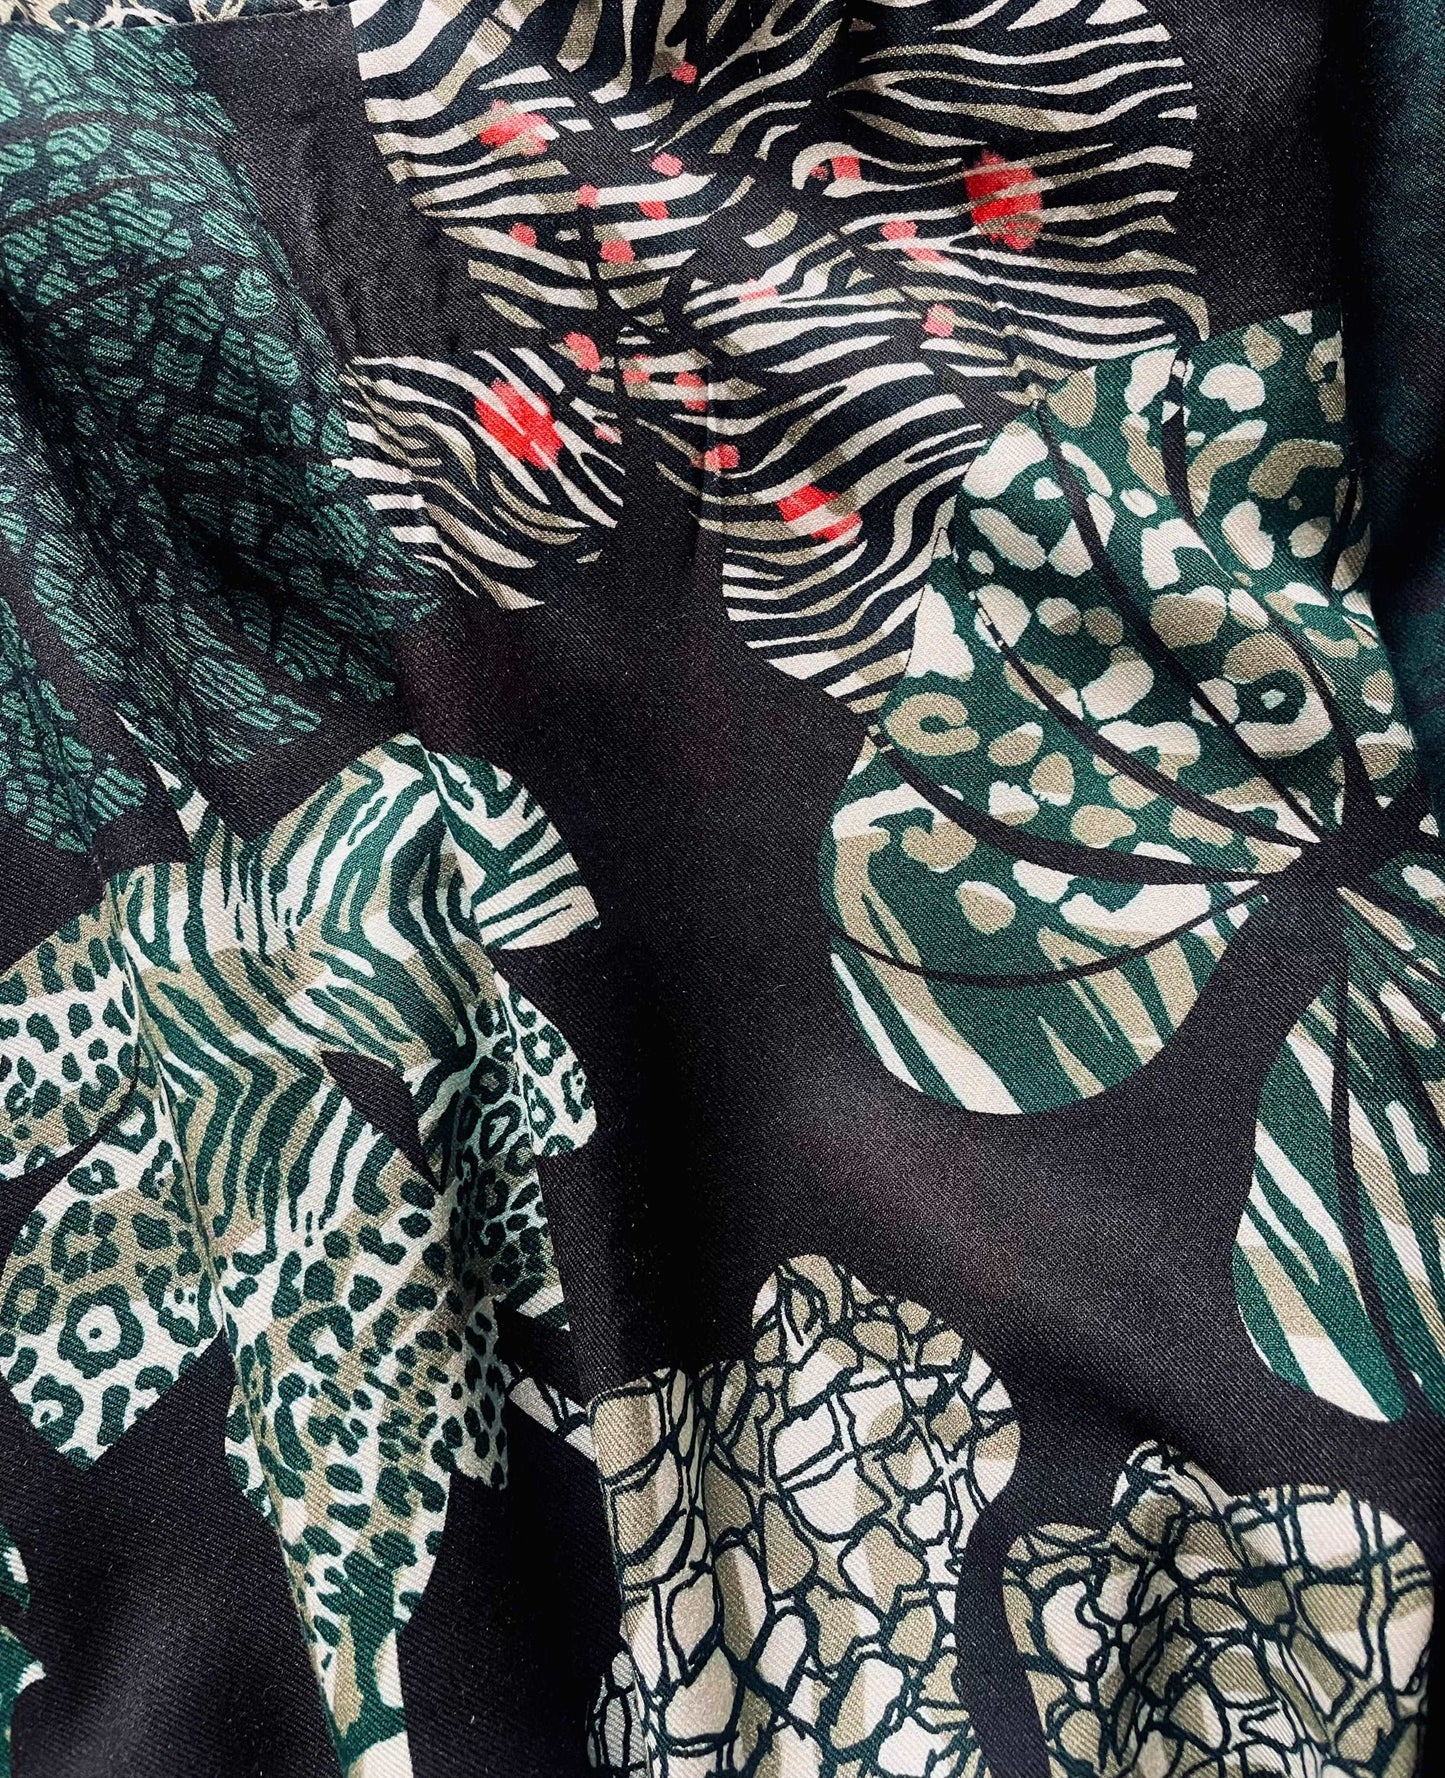 Leopard leaf fabric